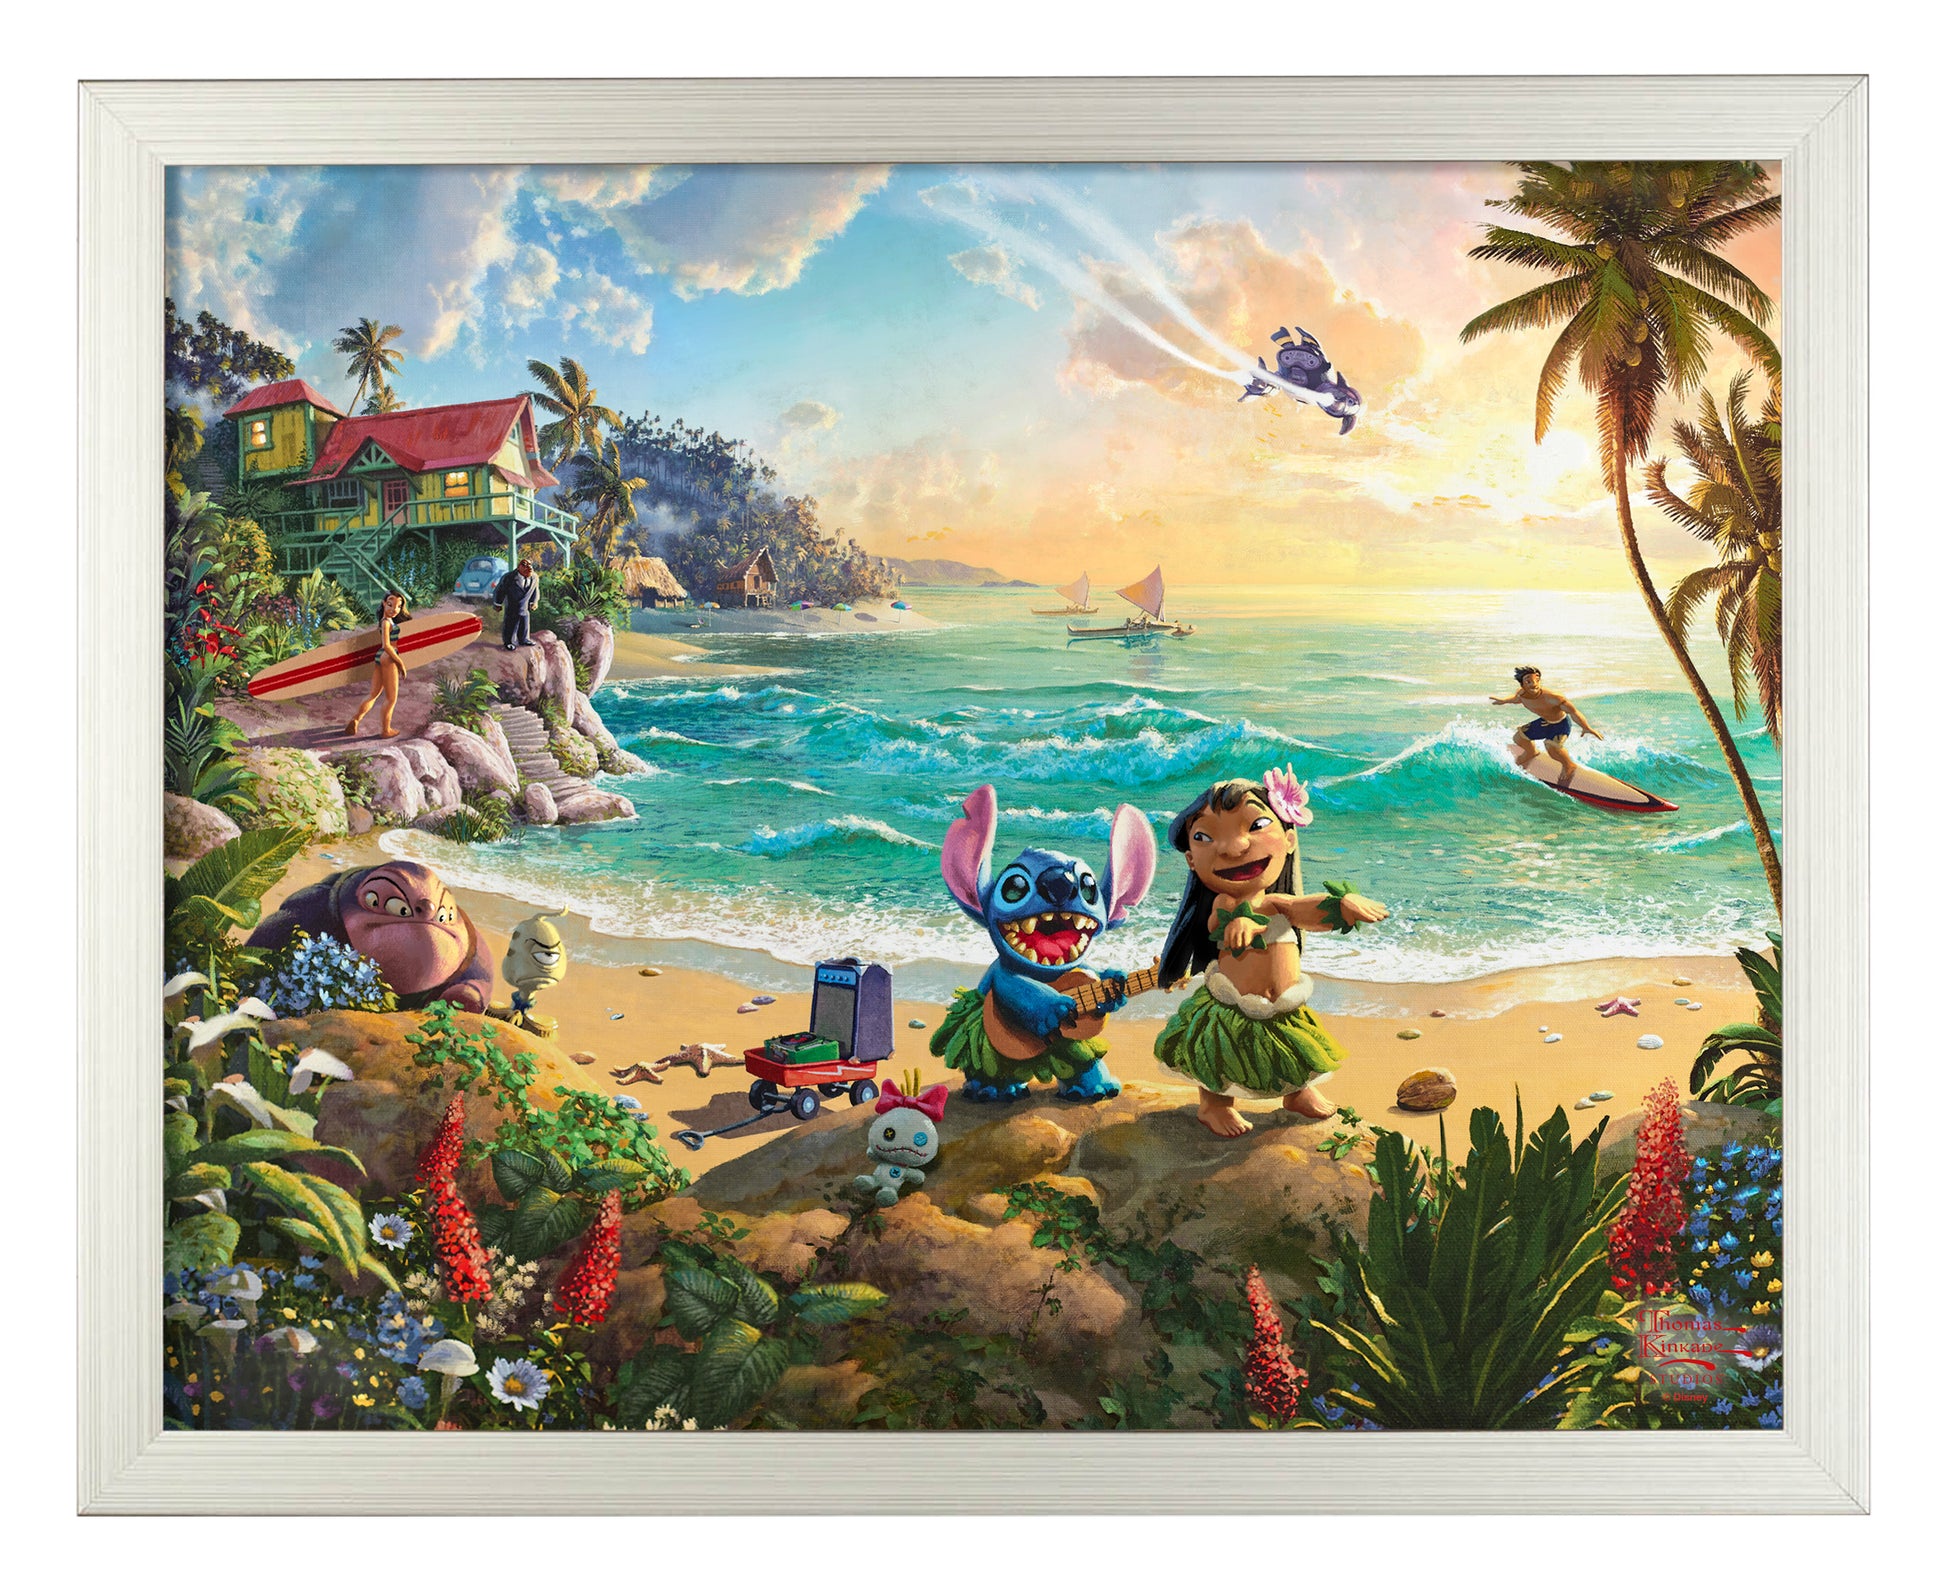 Stitch (Disney) Themed Art Print Lilo & Stitch Wall Decor